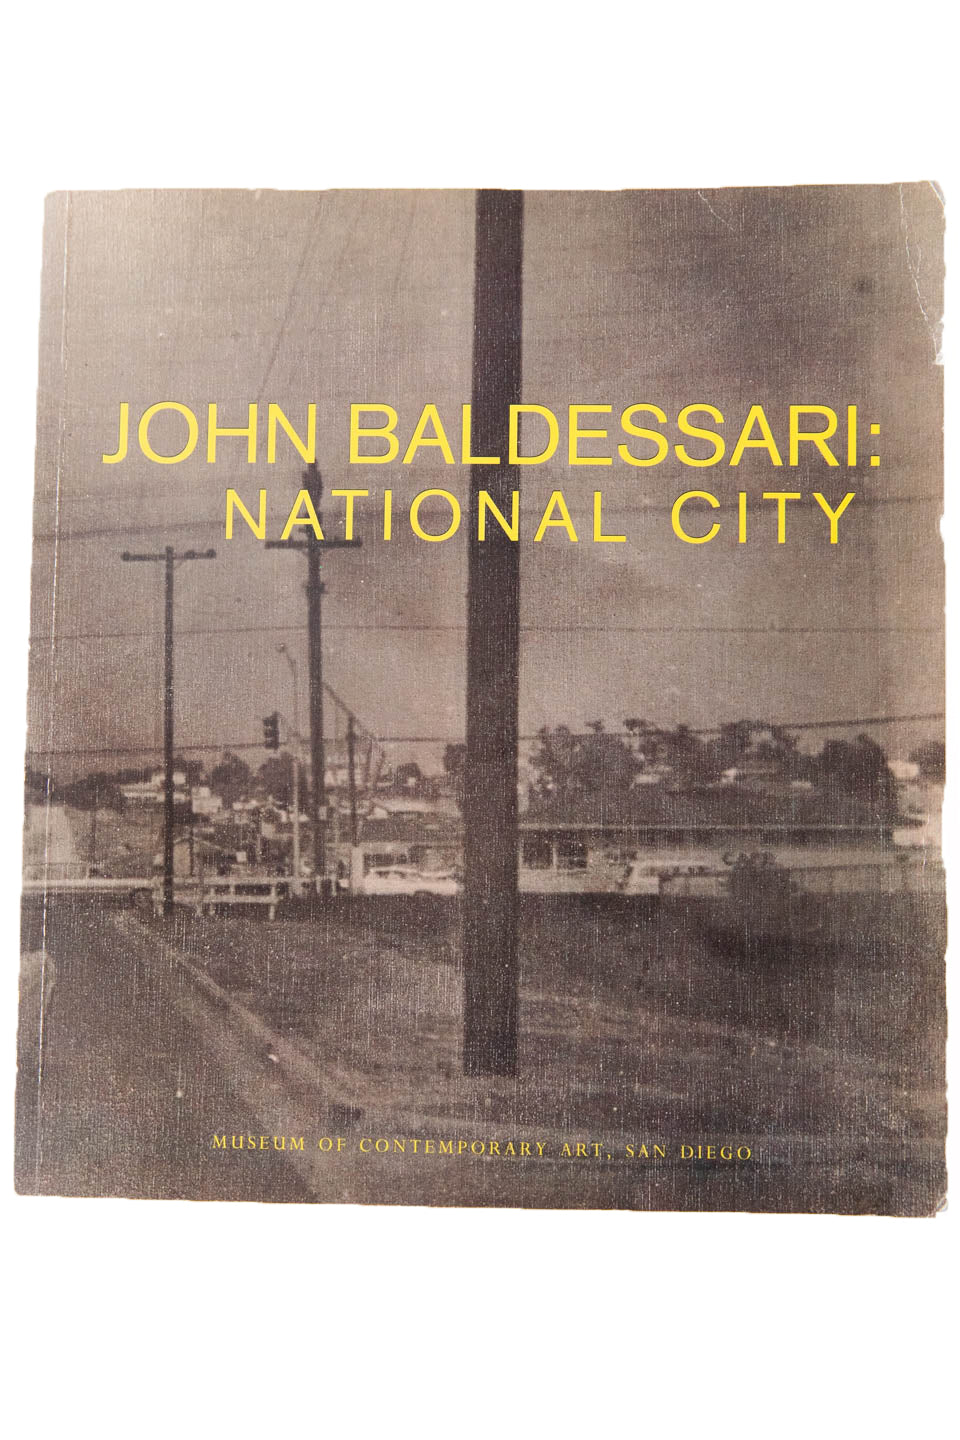 JOHN BALDESSARI | NATIONAL CITY